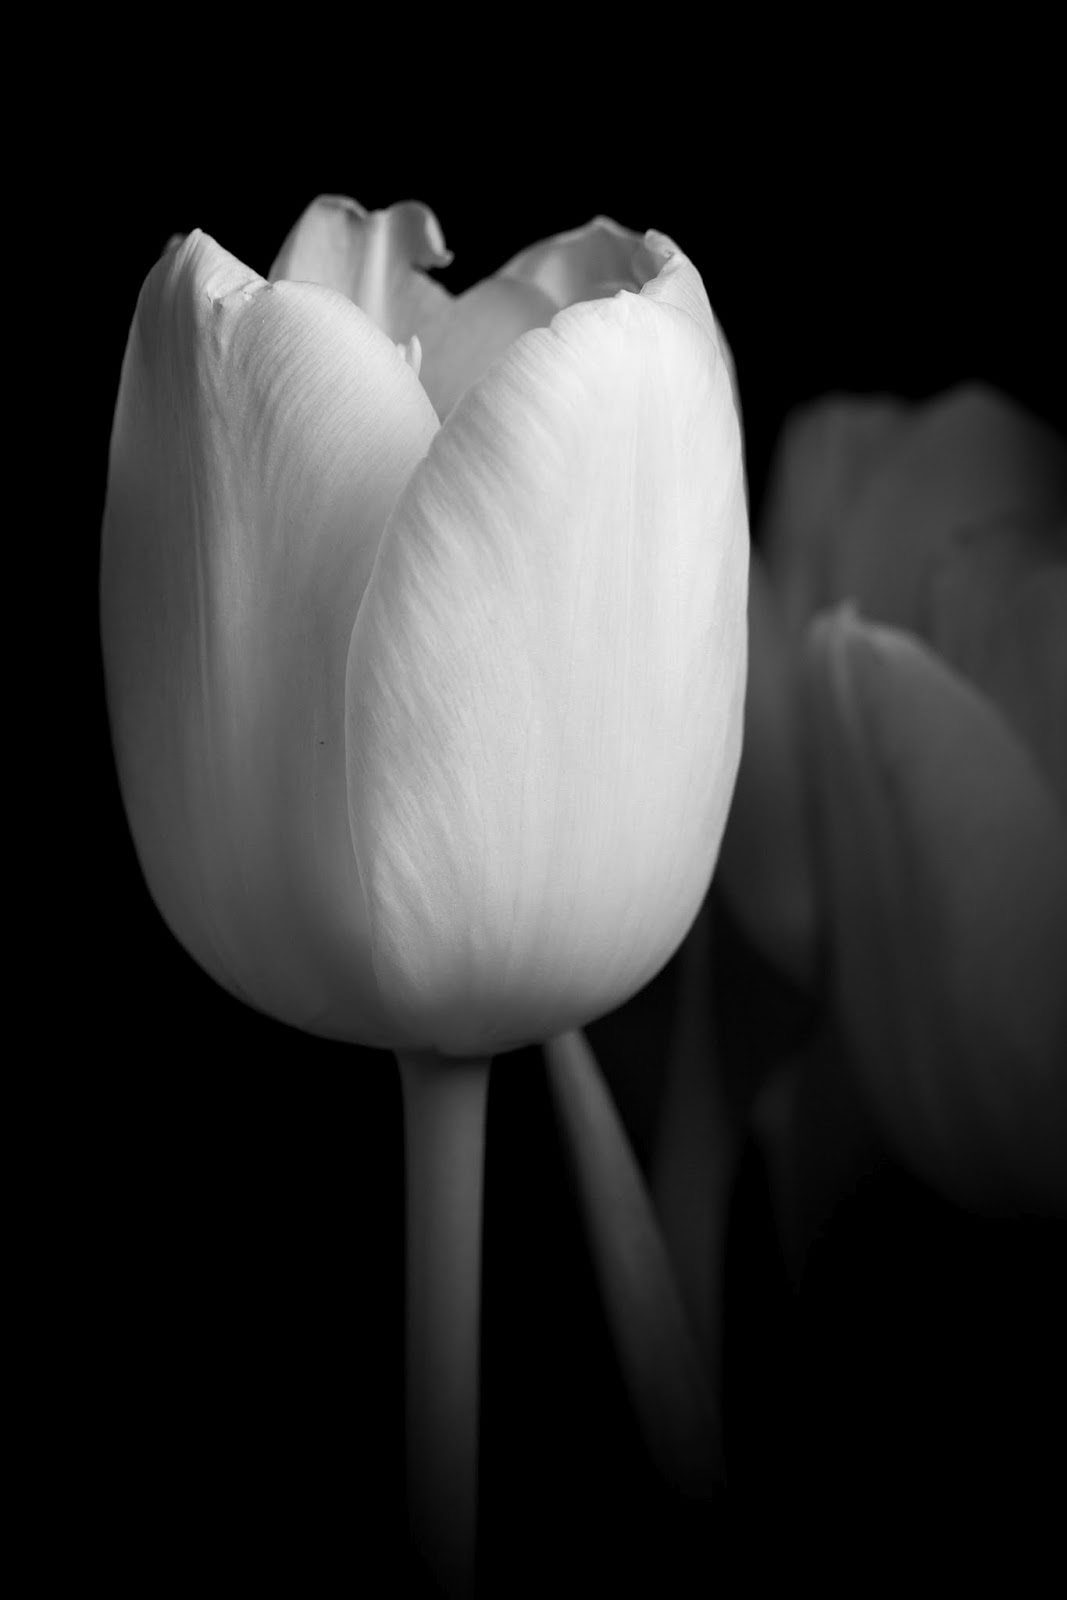 The World in Black & White: Tulip